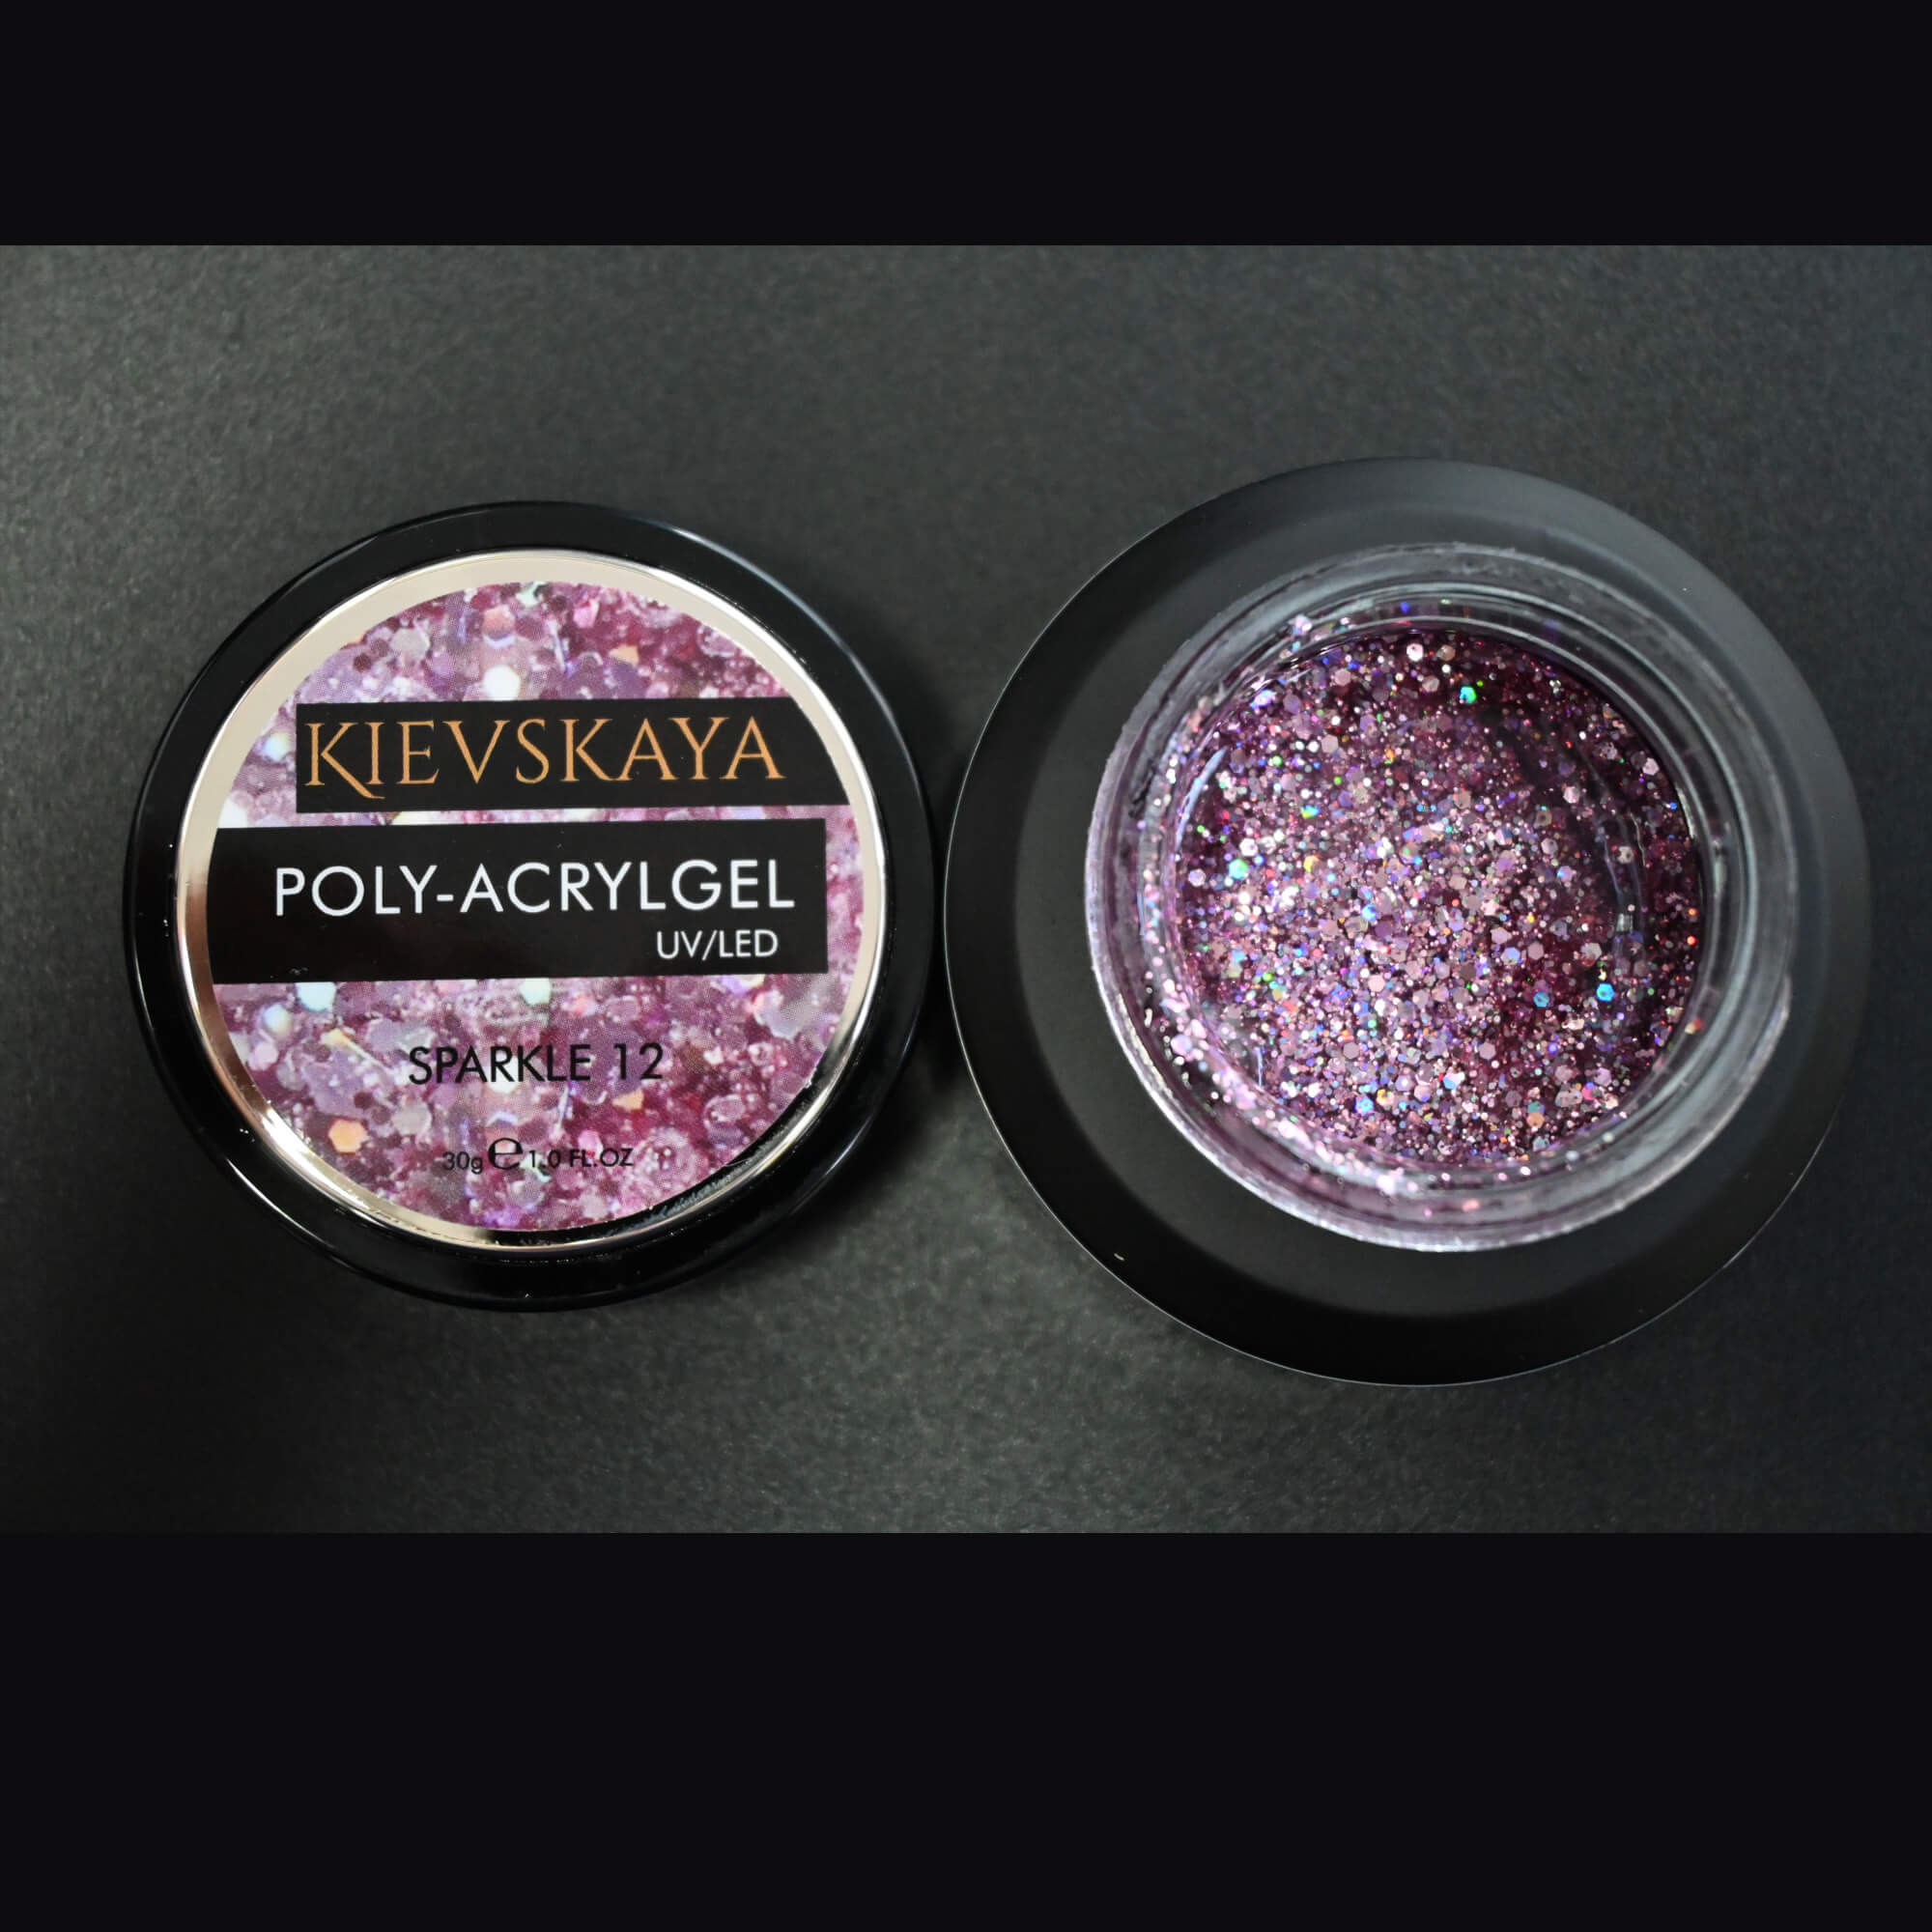 Poly-acrylgel Sparkle Kievskaya 30gr-sparkle12 - Sparkle12 - Everin.ro